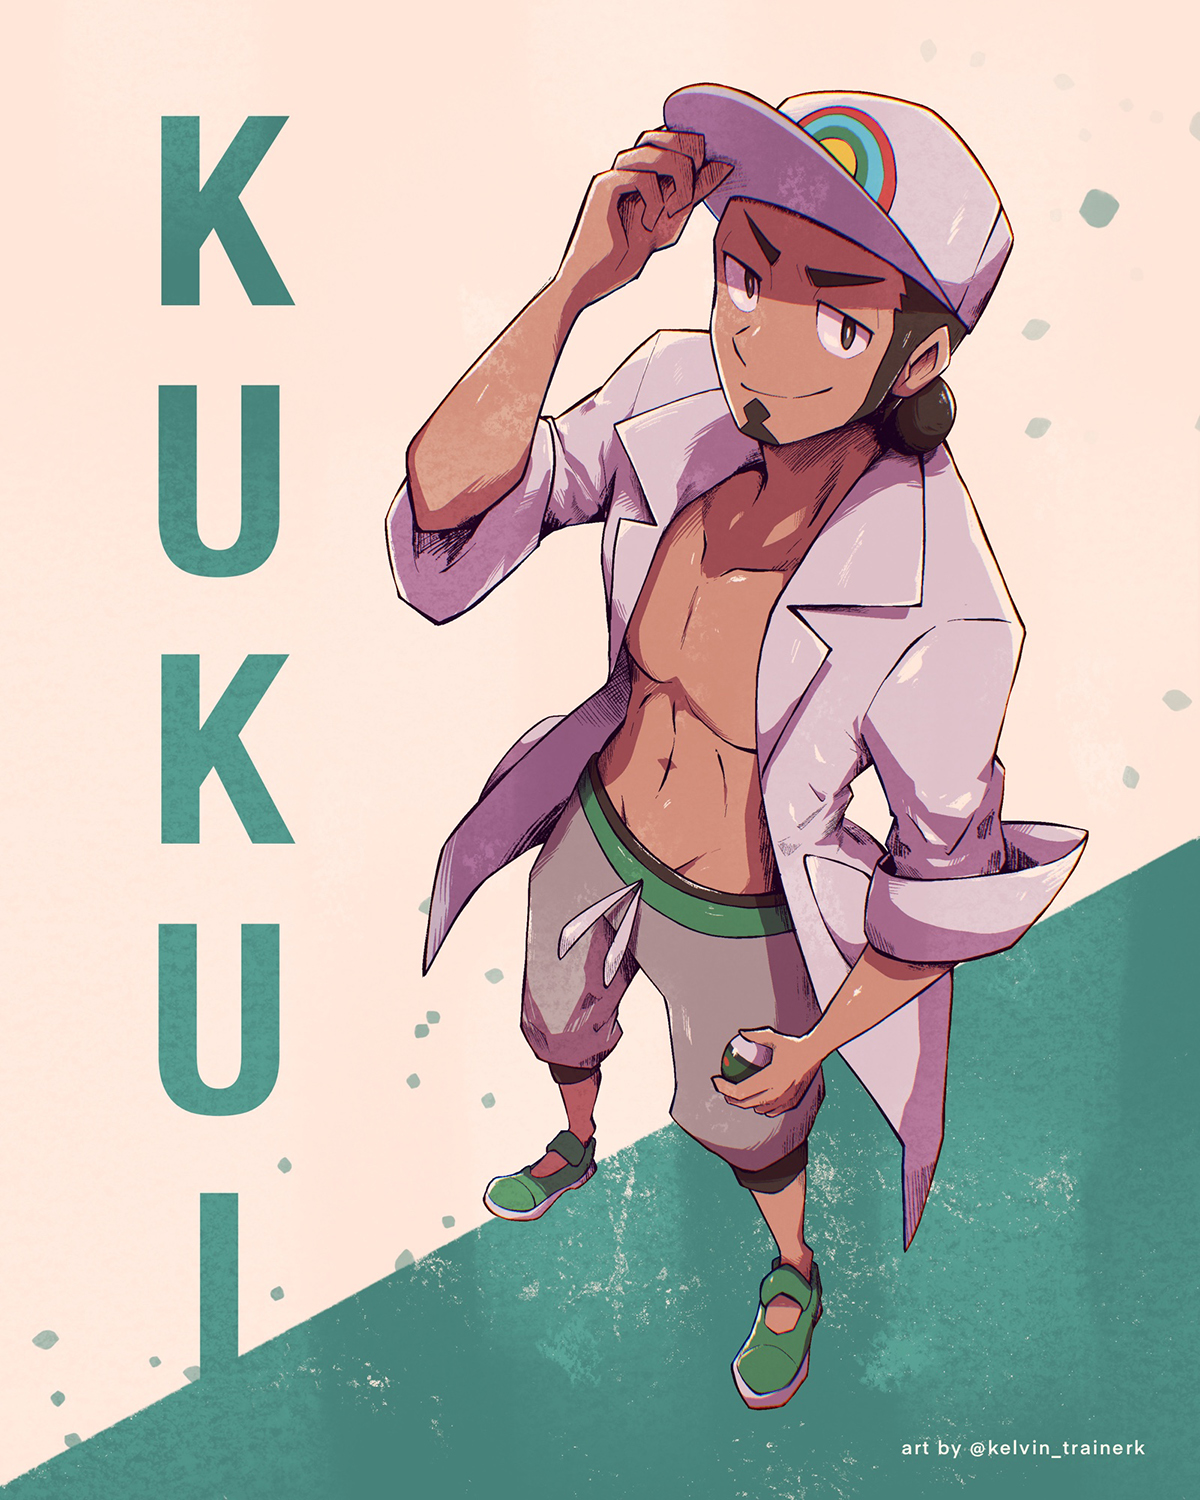 kukui - Twitter Search /